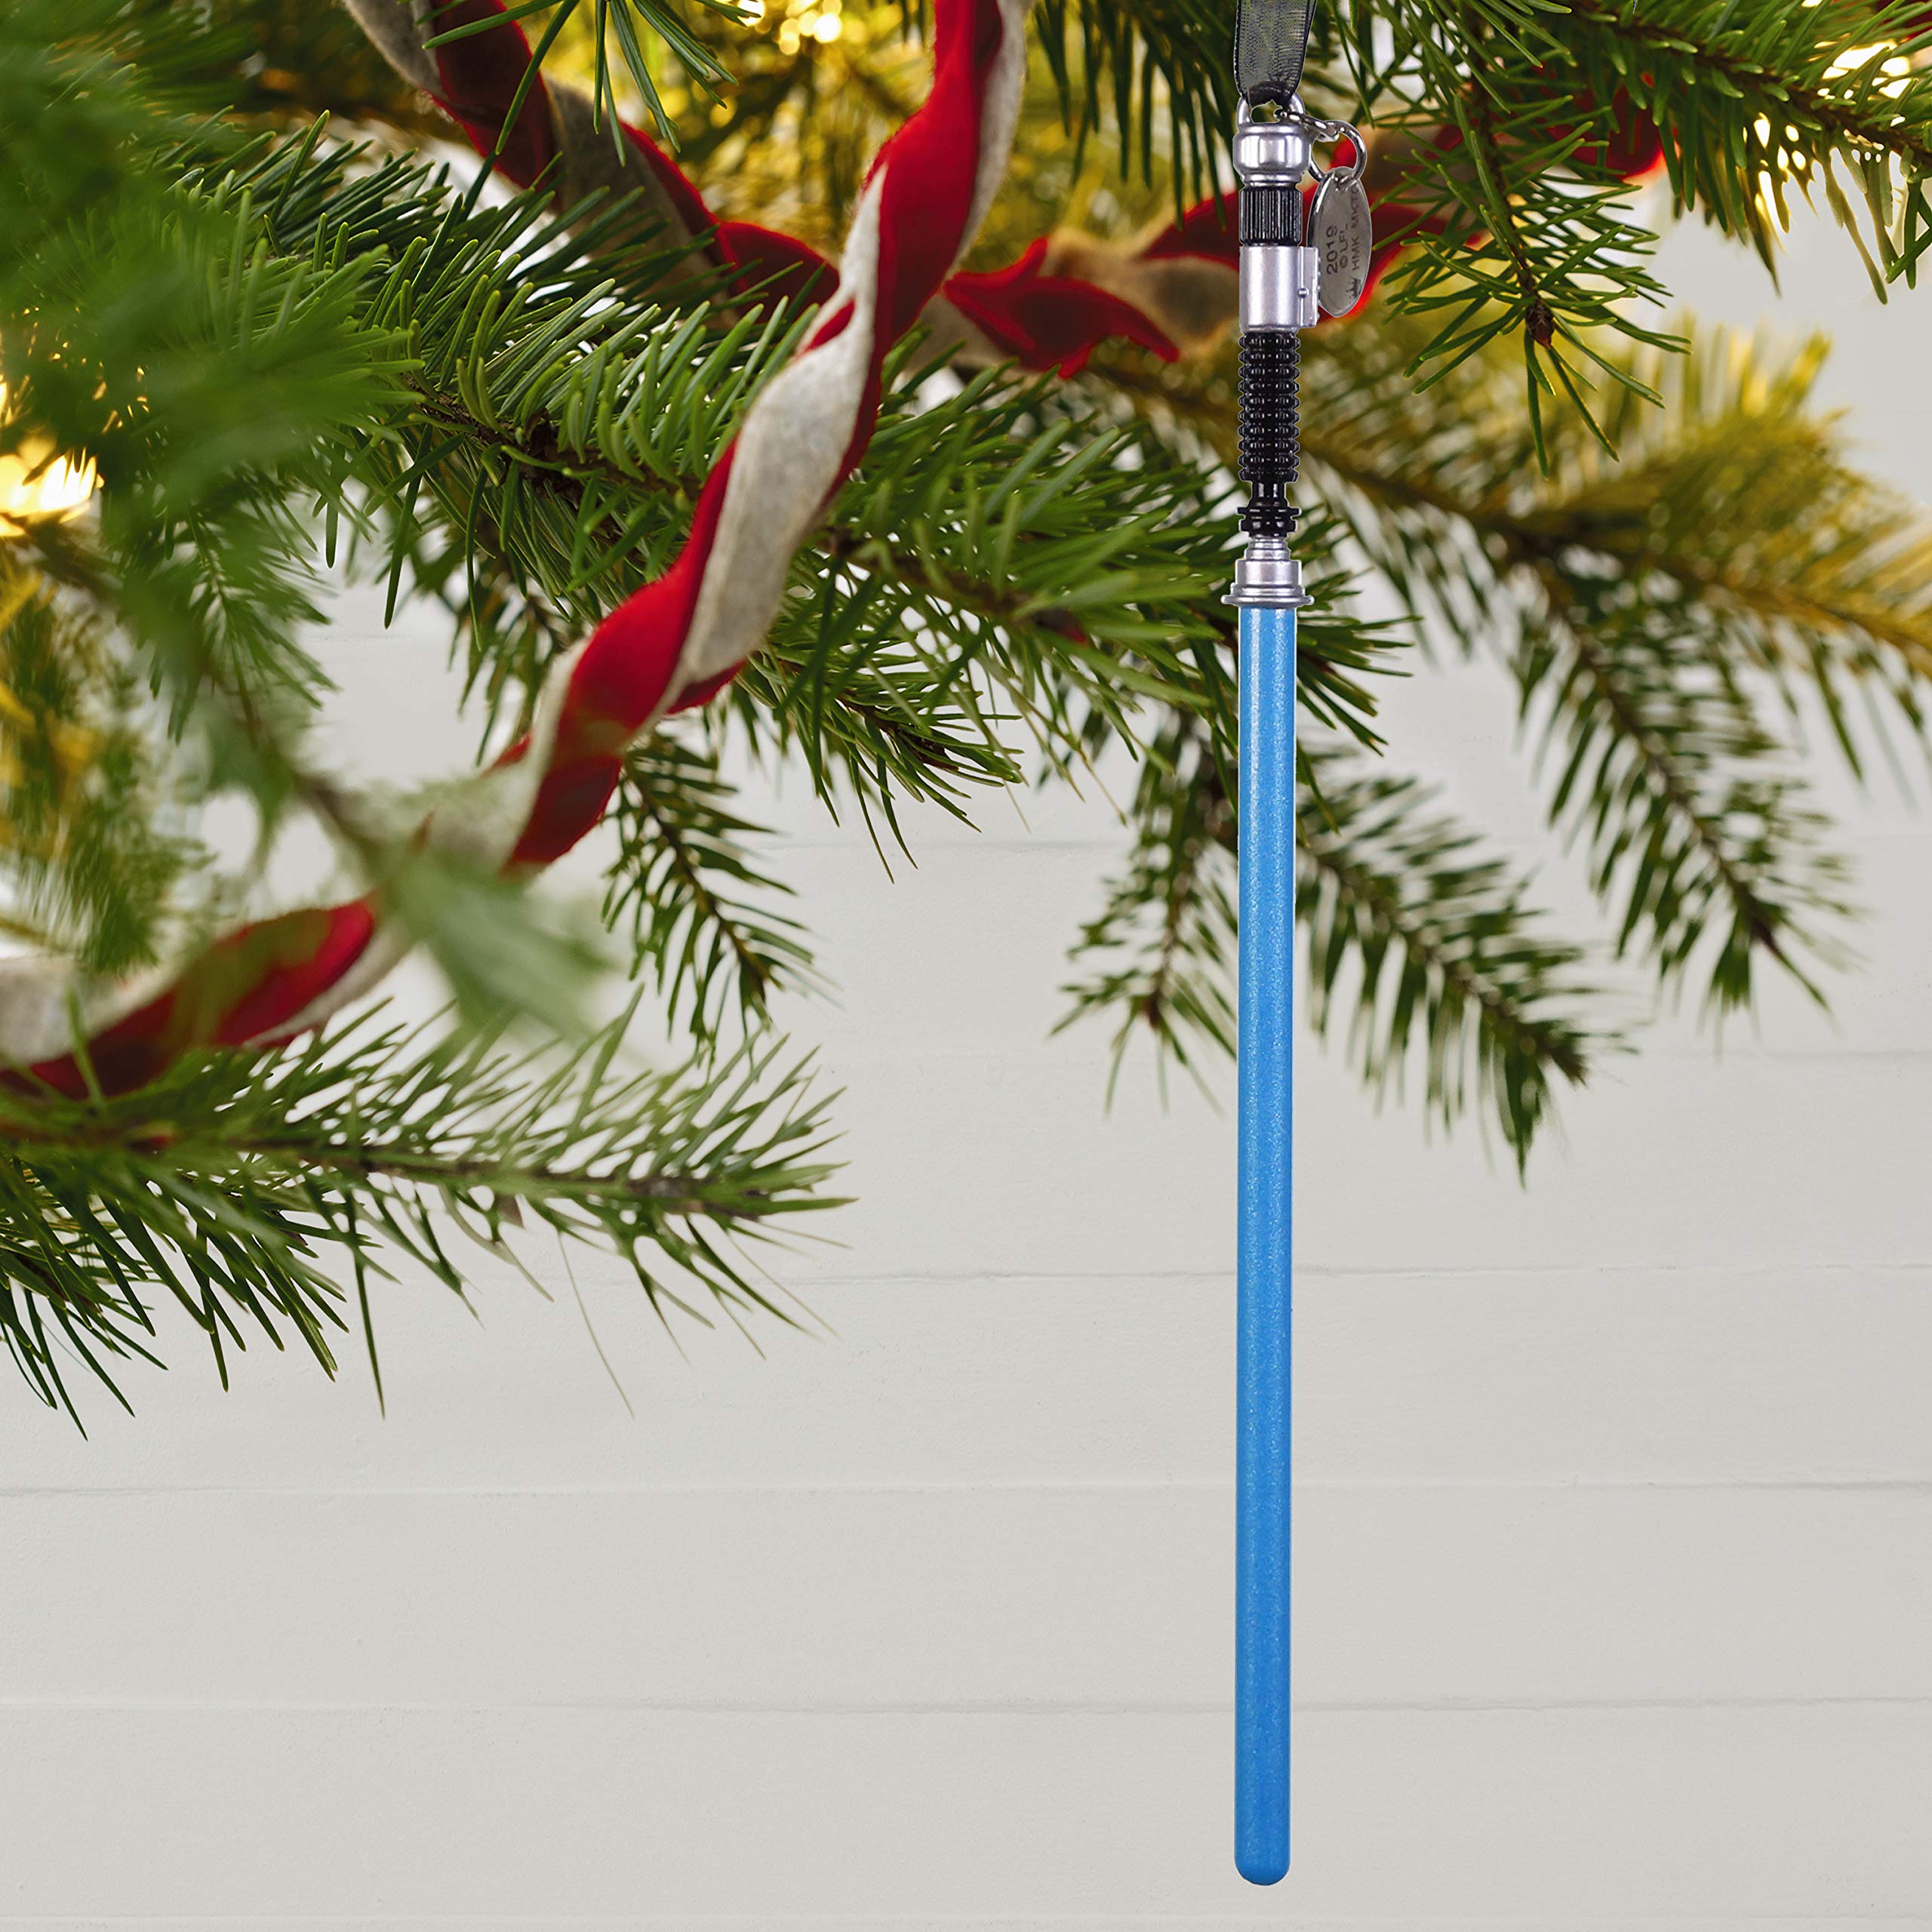 Hallmark Keepsake Christmas 2019 Year Dated Star Wars Darth Vader, OBI-Wan Kenobi and Yoda Lightsabers Ornament, Metal, Set of 3